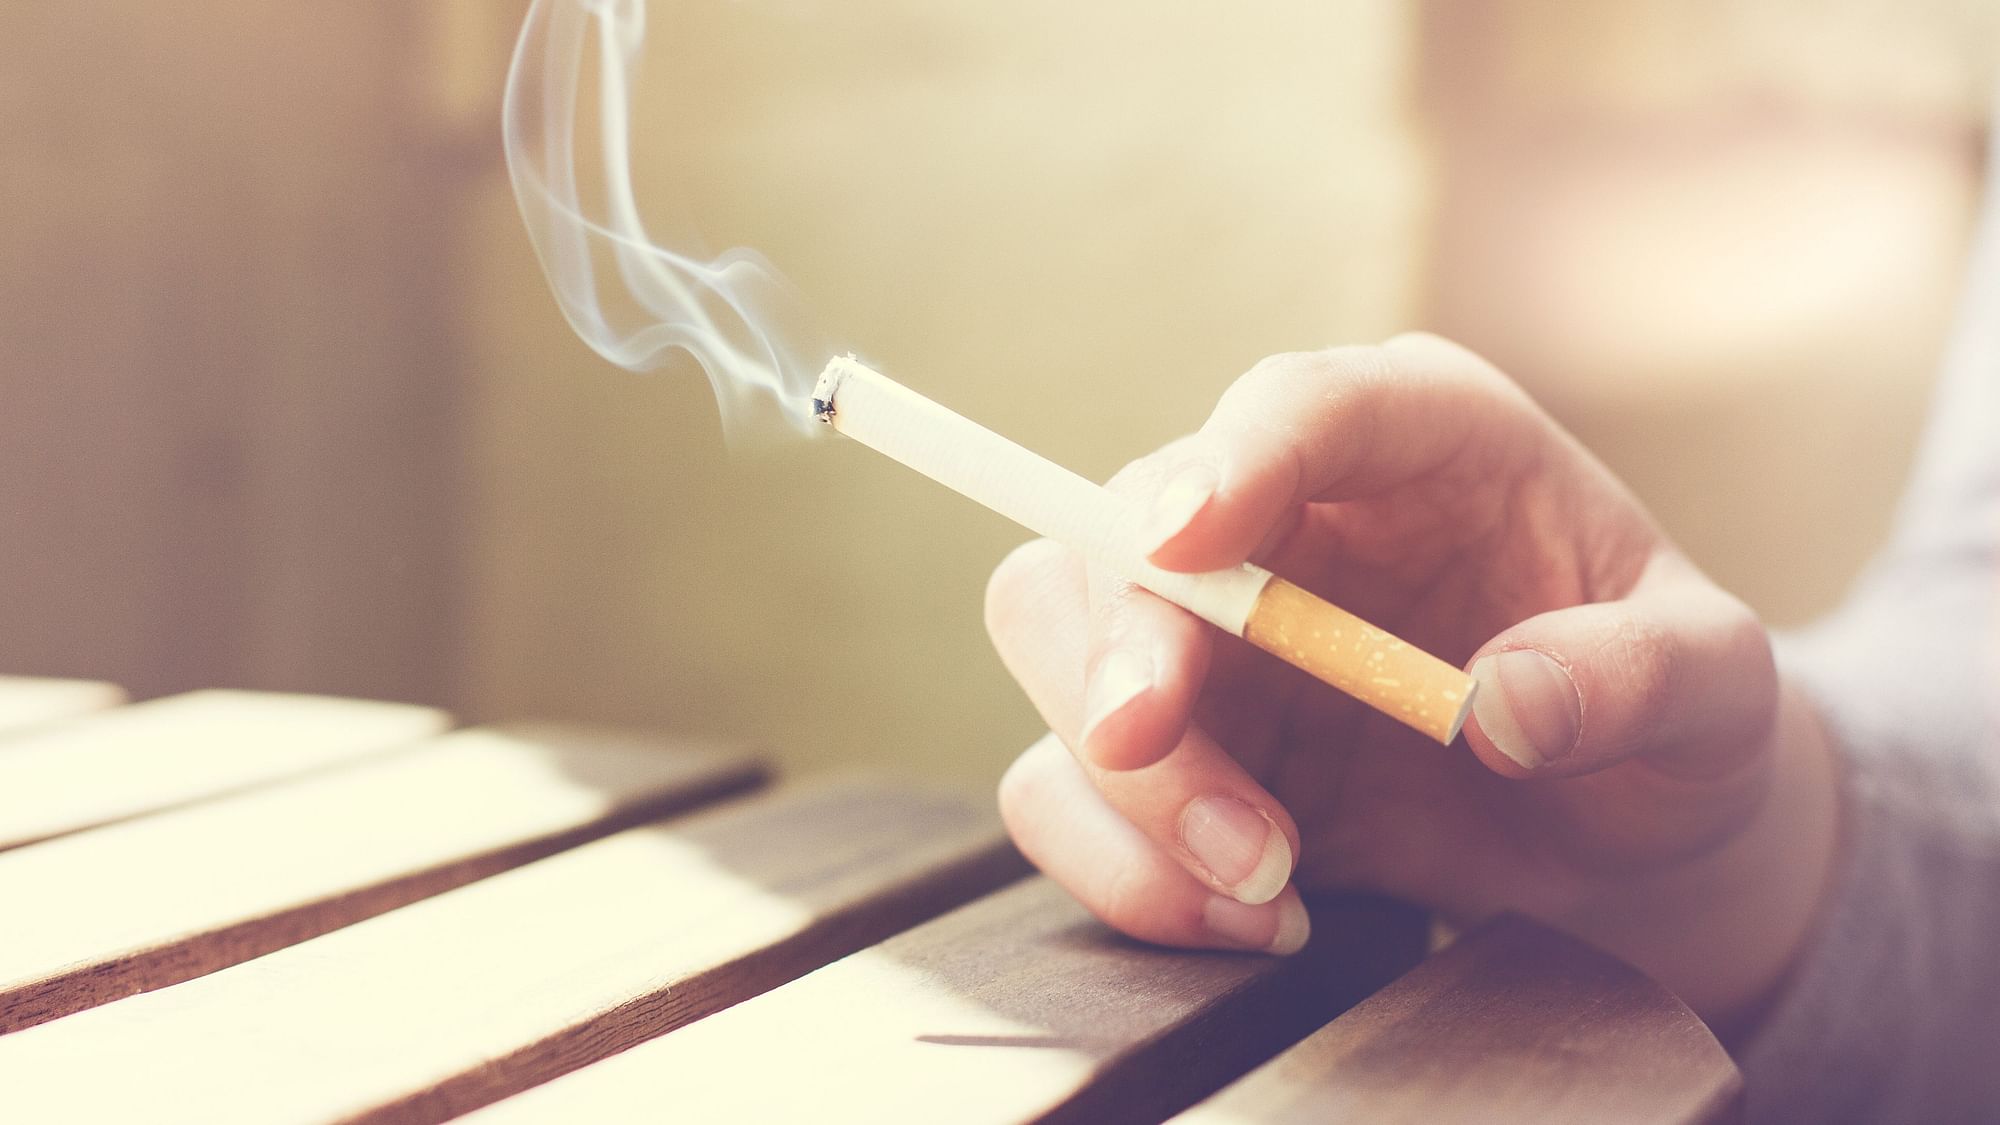 Cigarette smoking linked to depression, schizophrenia says new study